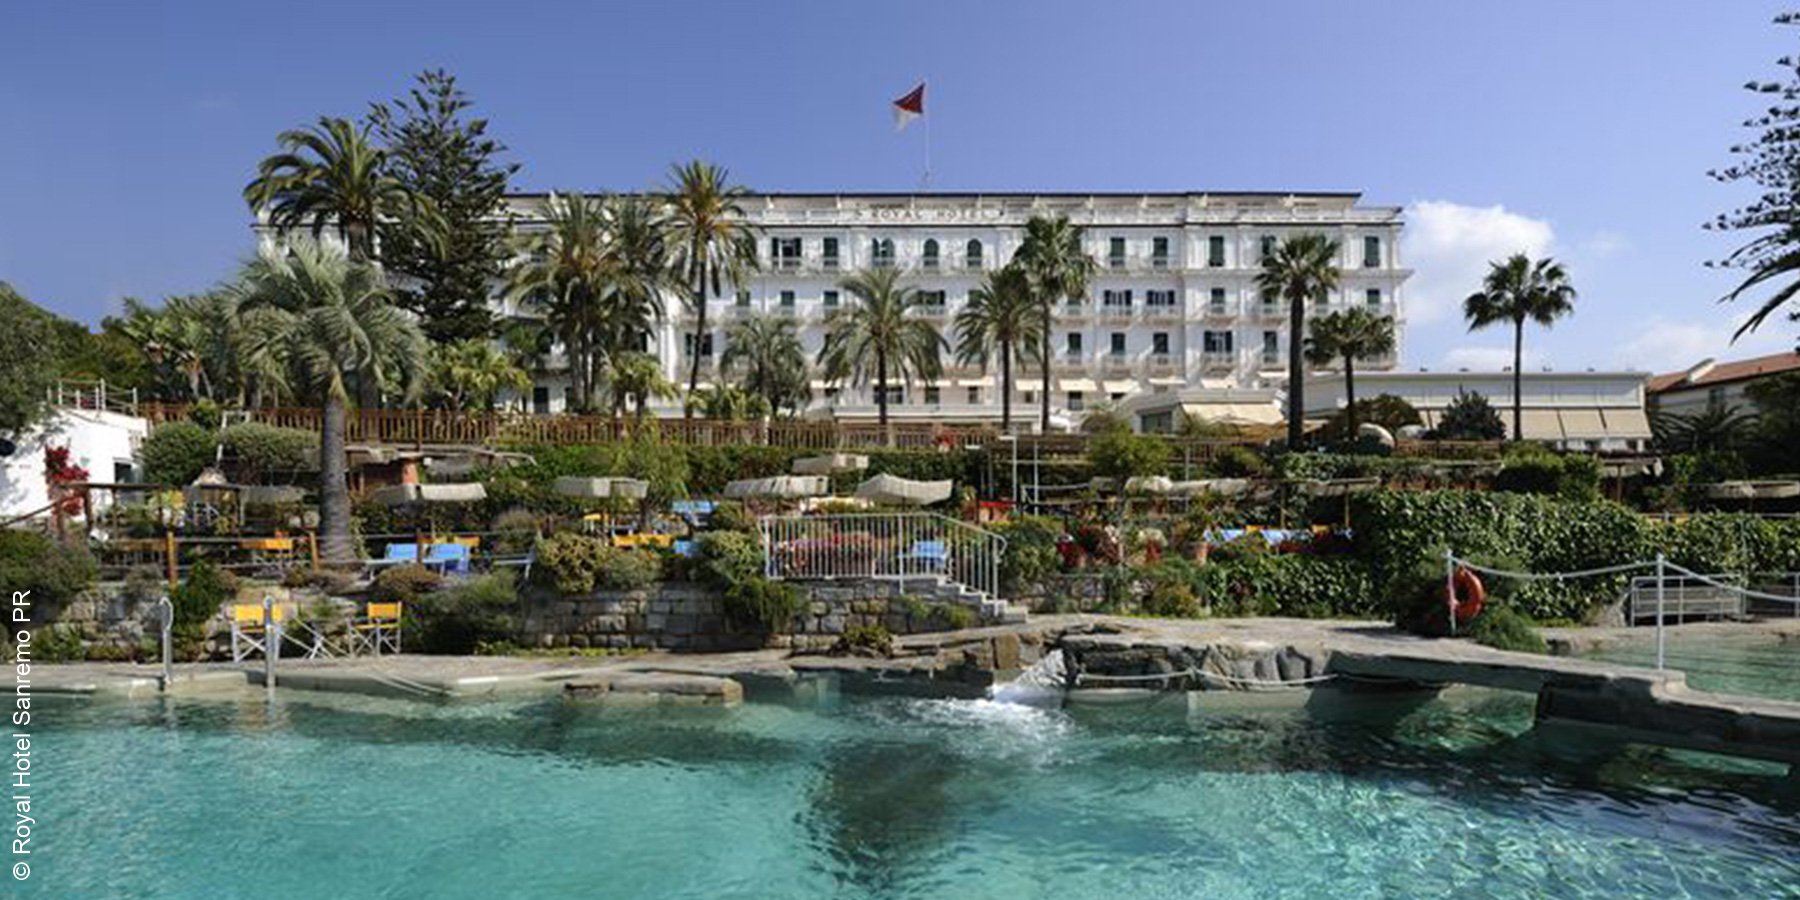 Royal Hotel | Sanremo | Hotel Pool | luxuszeit.com